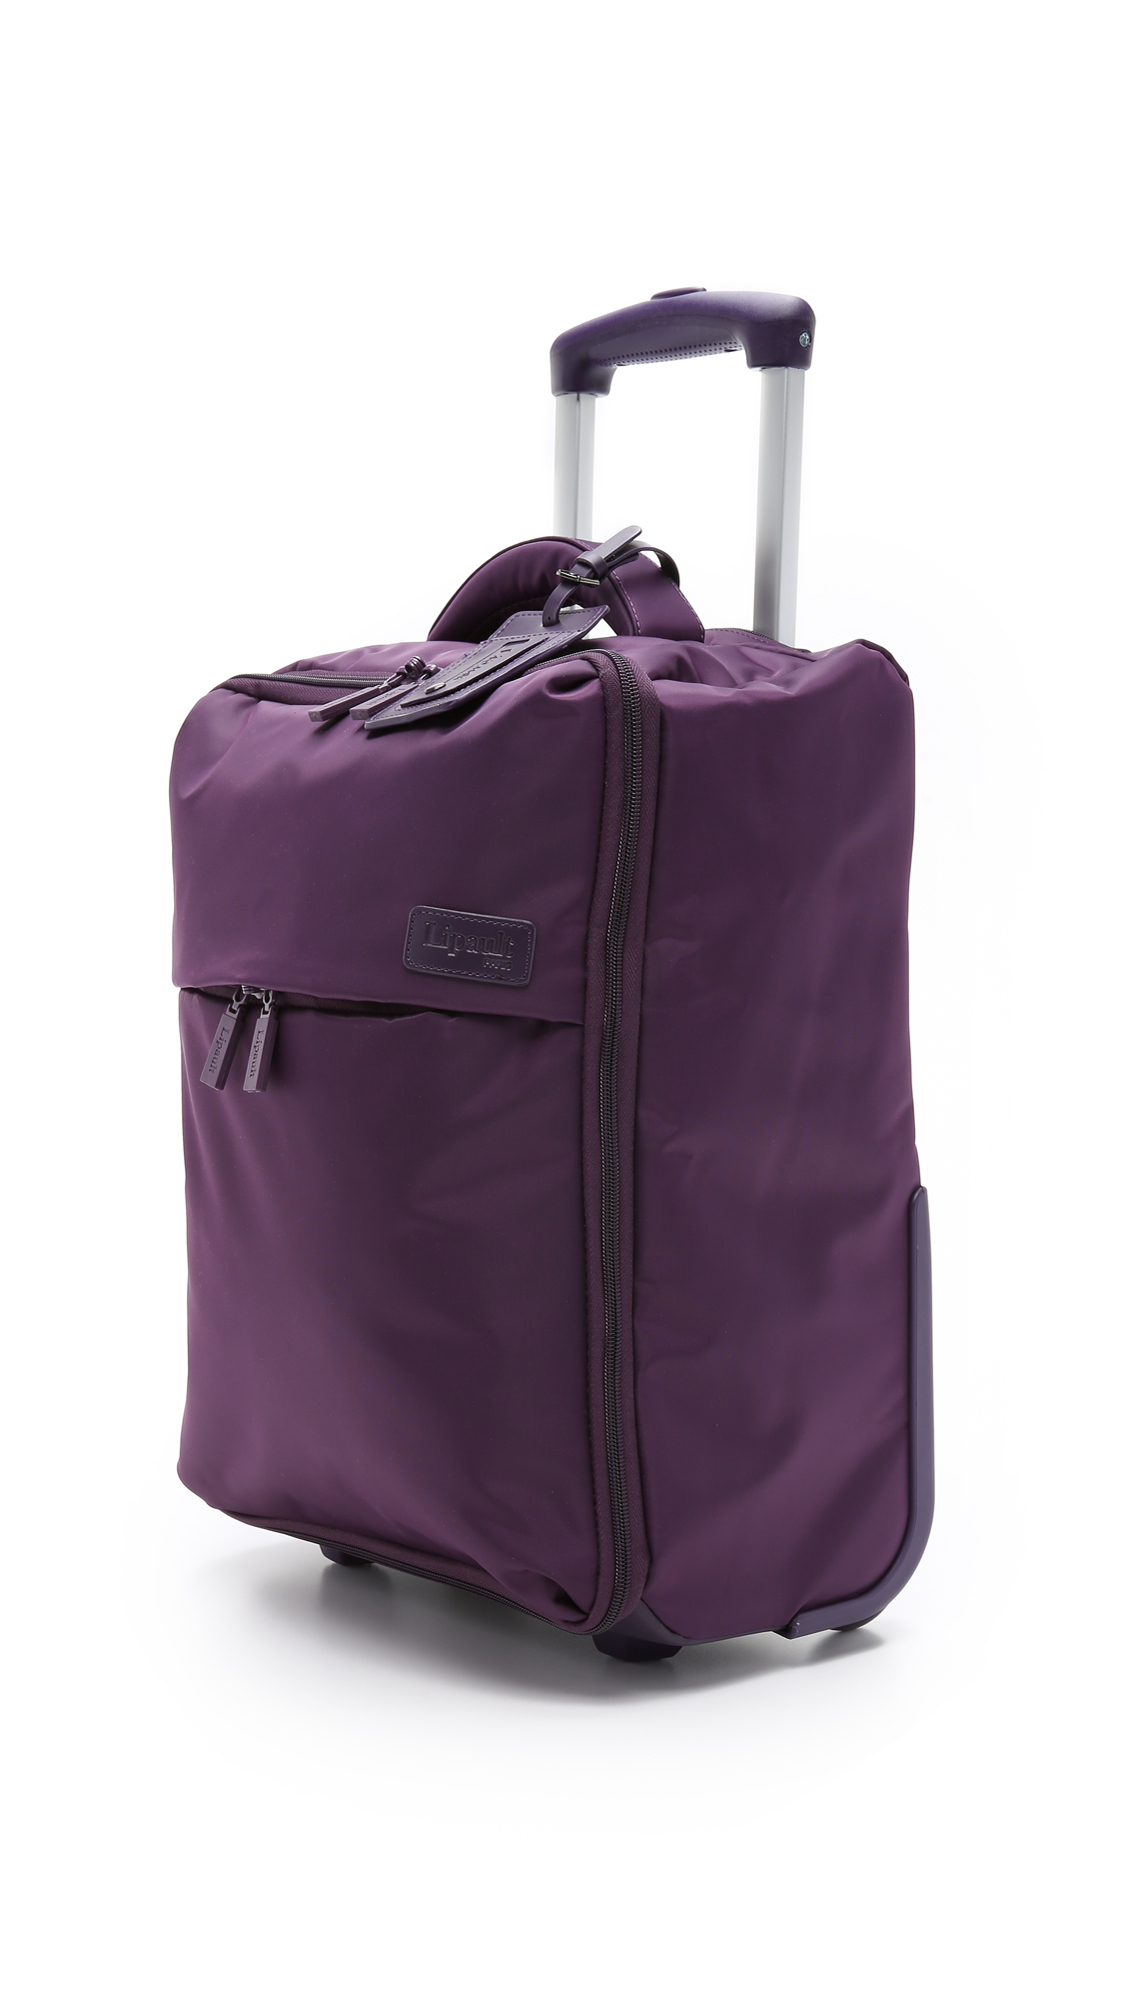 Lyst - Lipault Carry On Bag - Purple in Purple